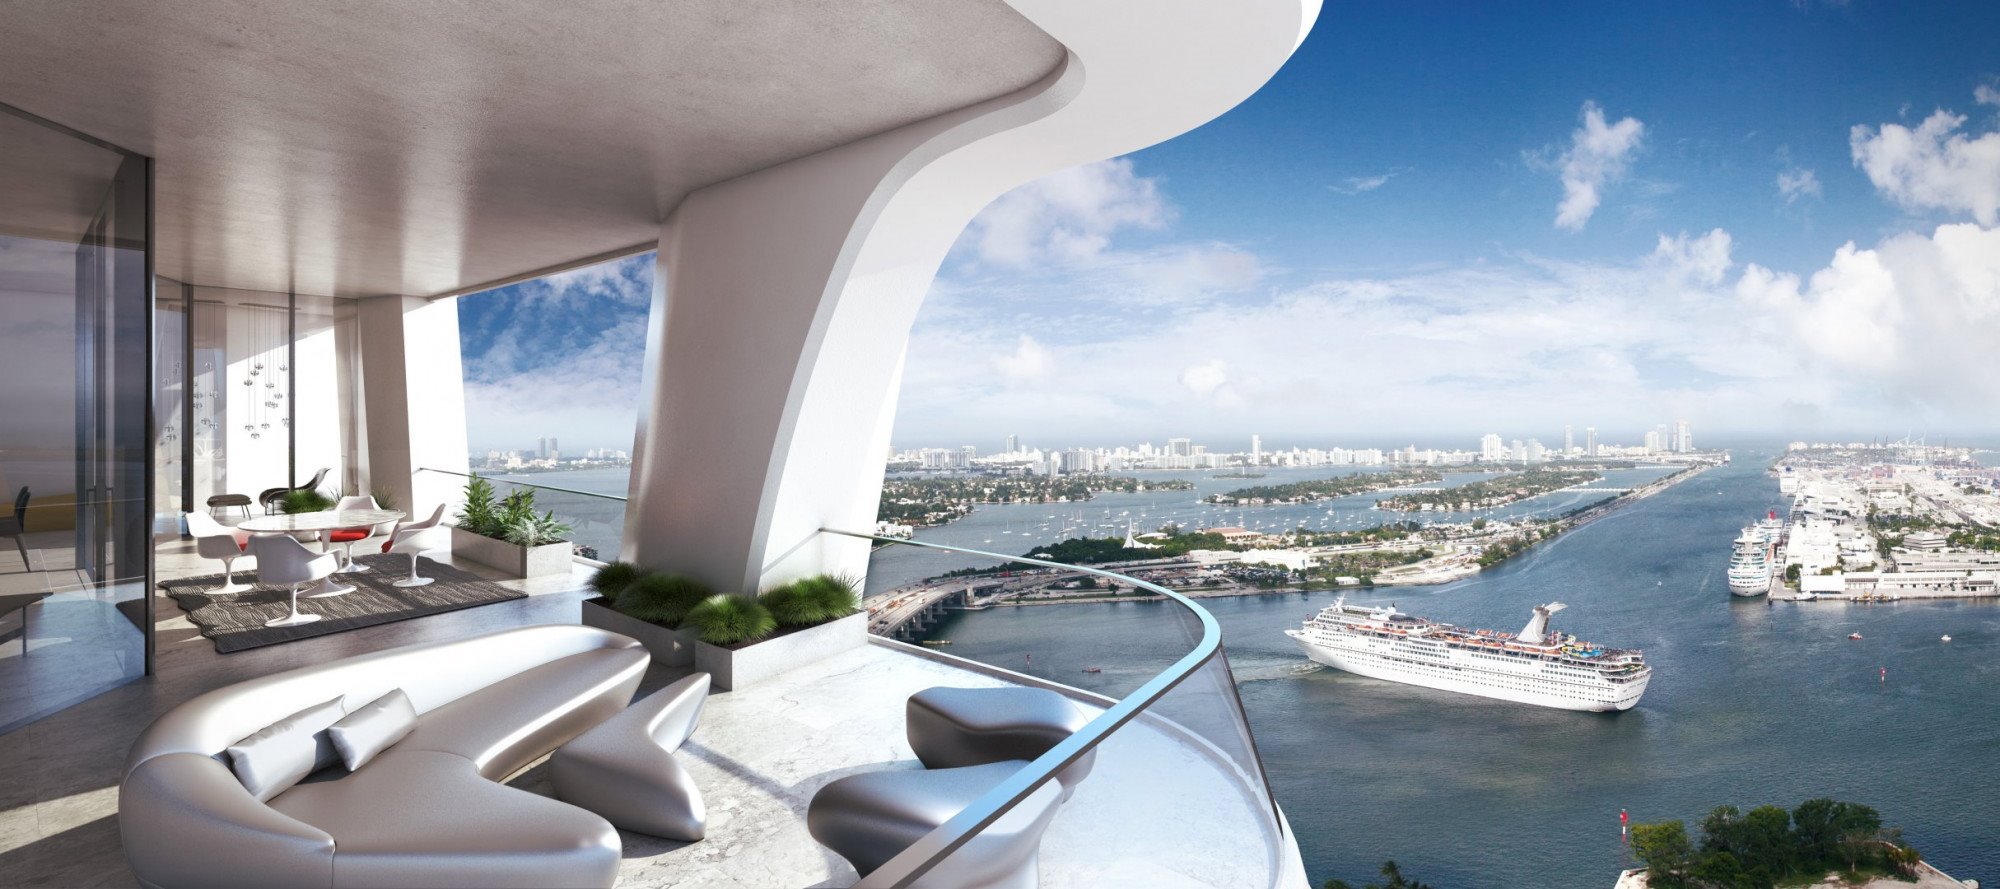 Terraza piso Beckham torre Zaha Hadid Miami